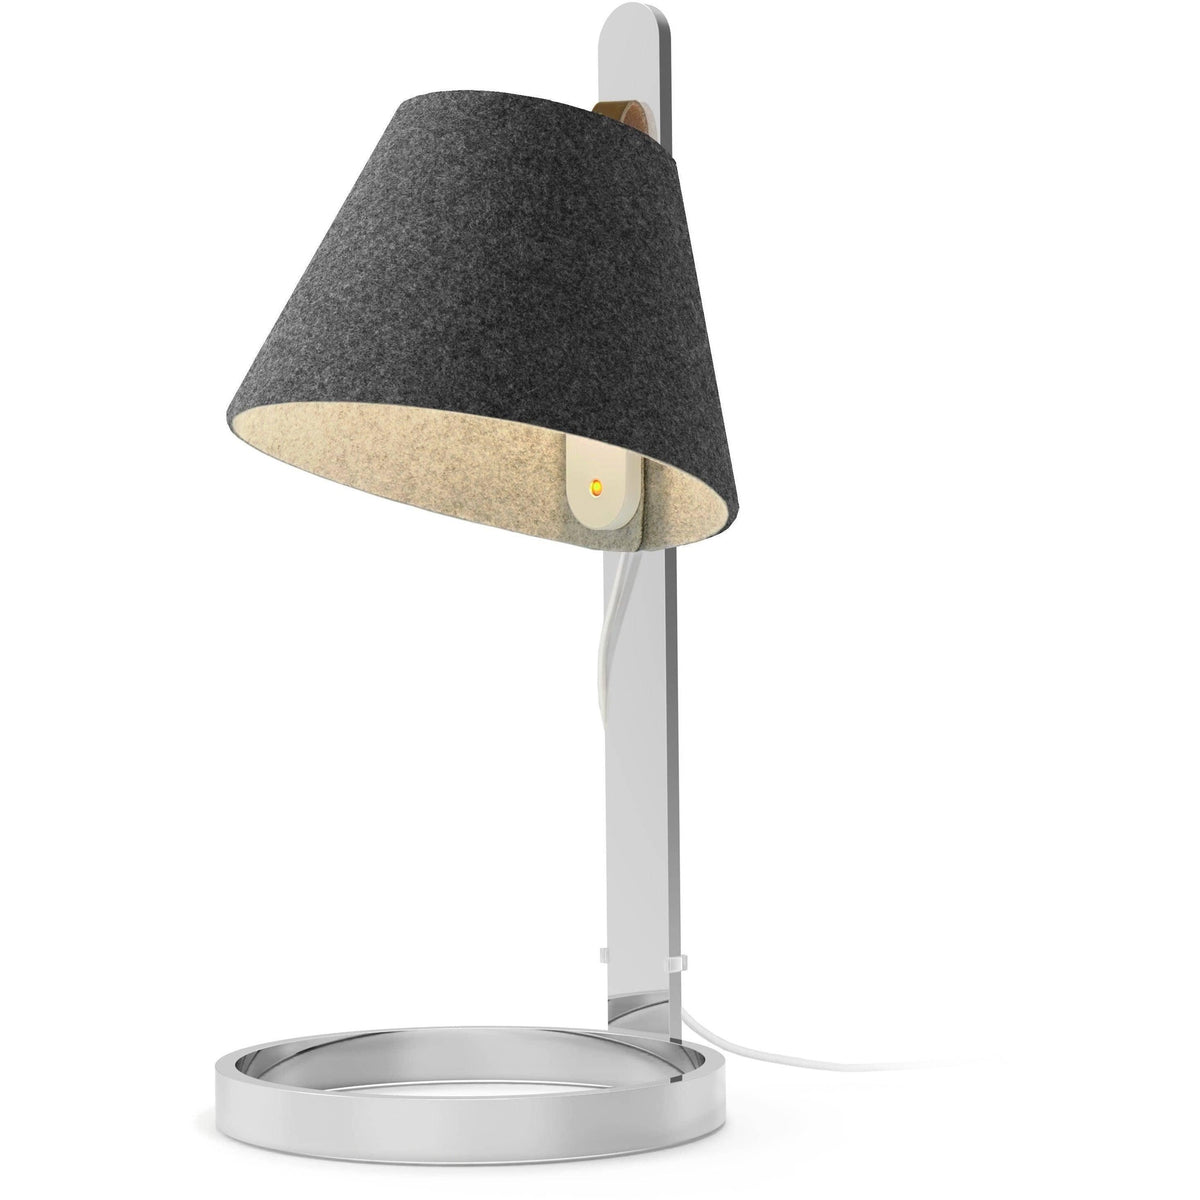 Pablo Designs - Lana Table Lamp - LANA MINI TBL CHR/GRY CRM | Montreal Lighting & Hardware